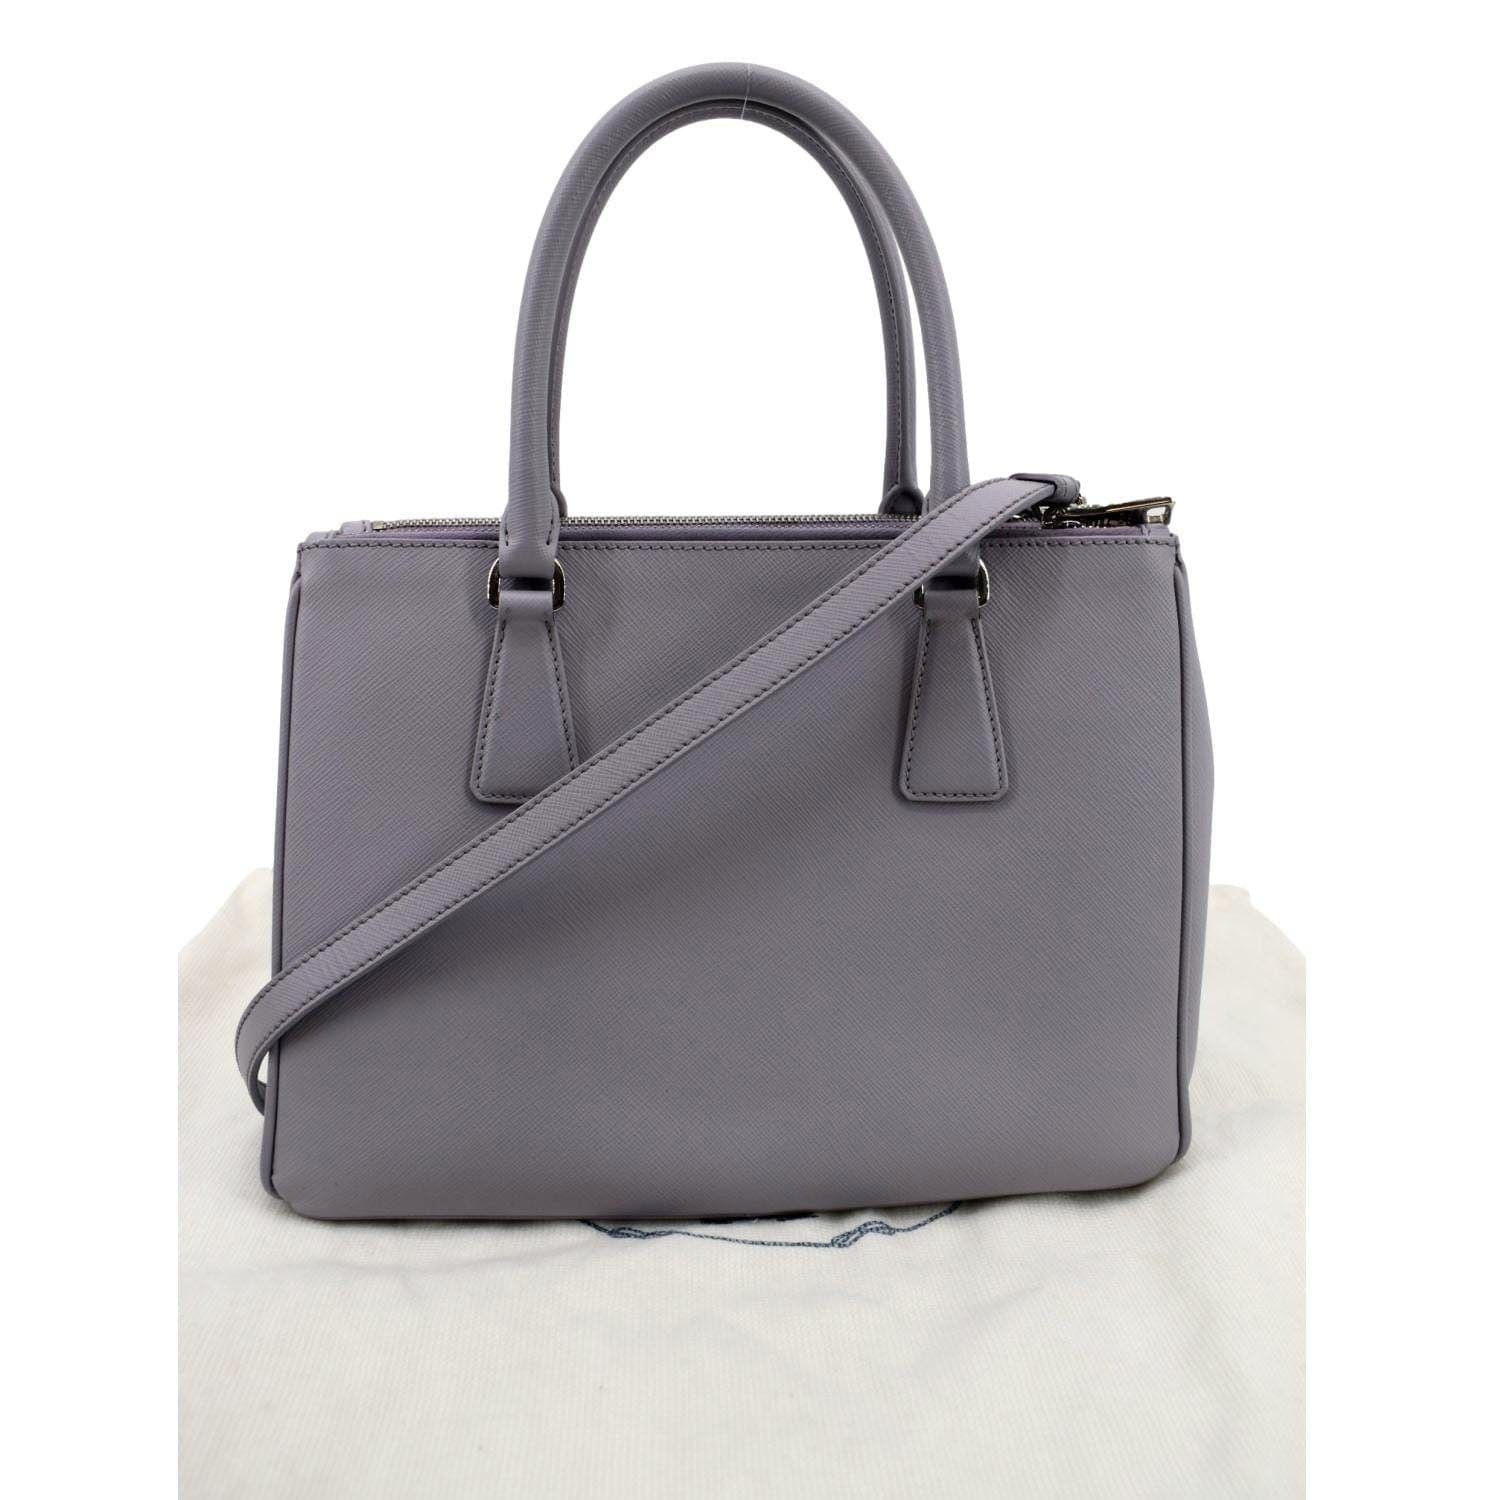 Prada Purple Saffiano Leather Crossbody Bag